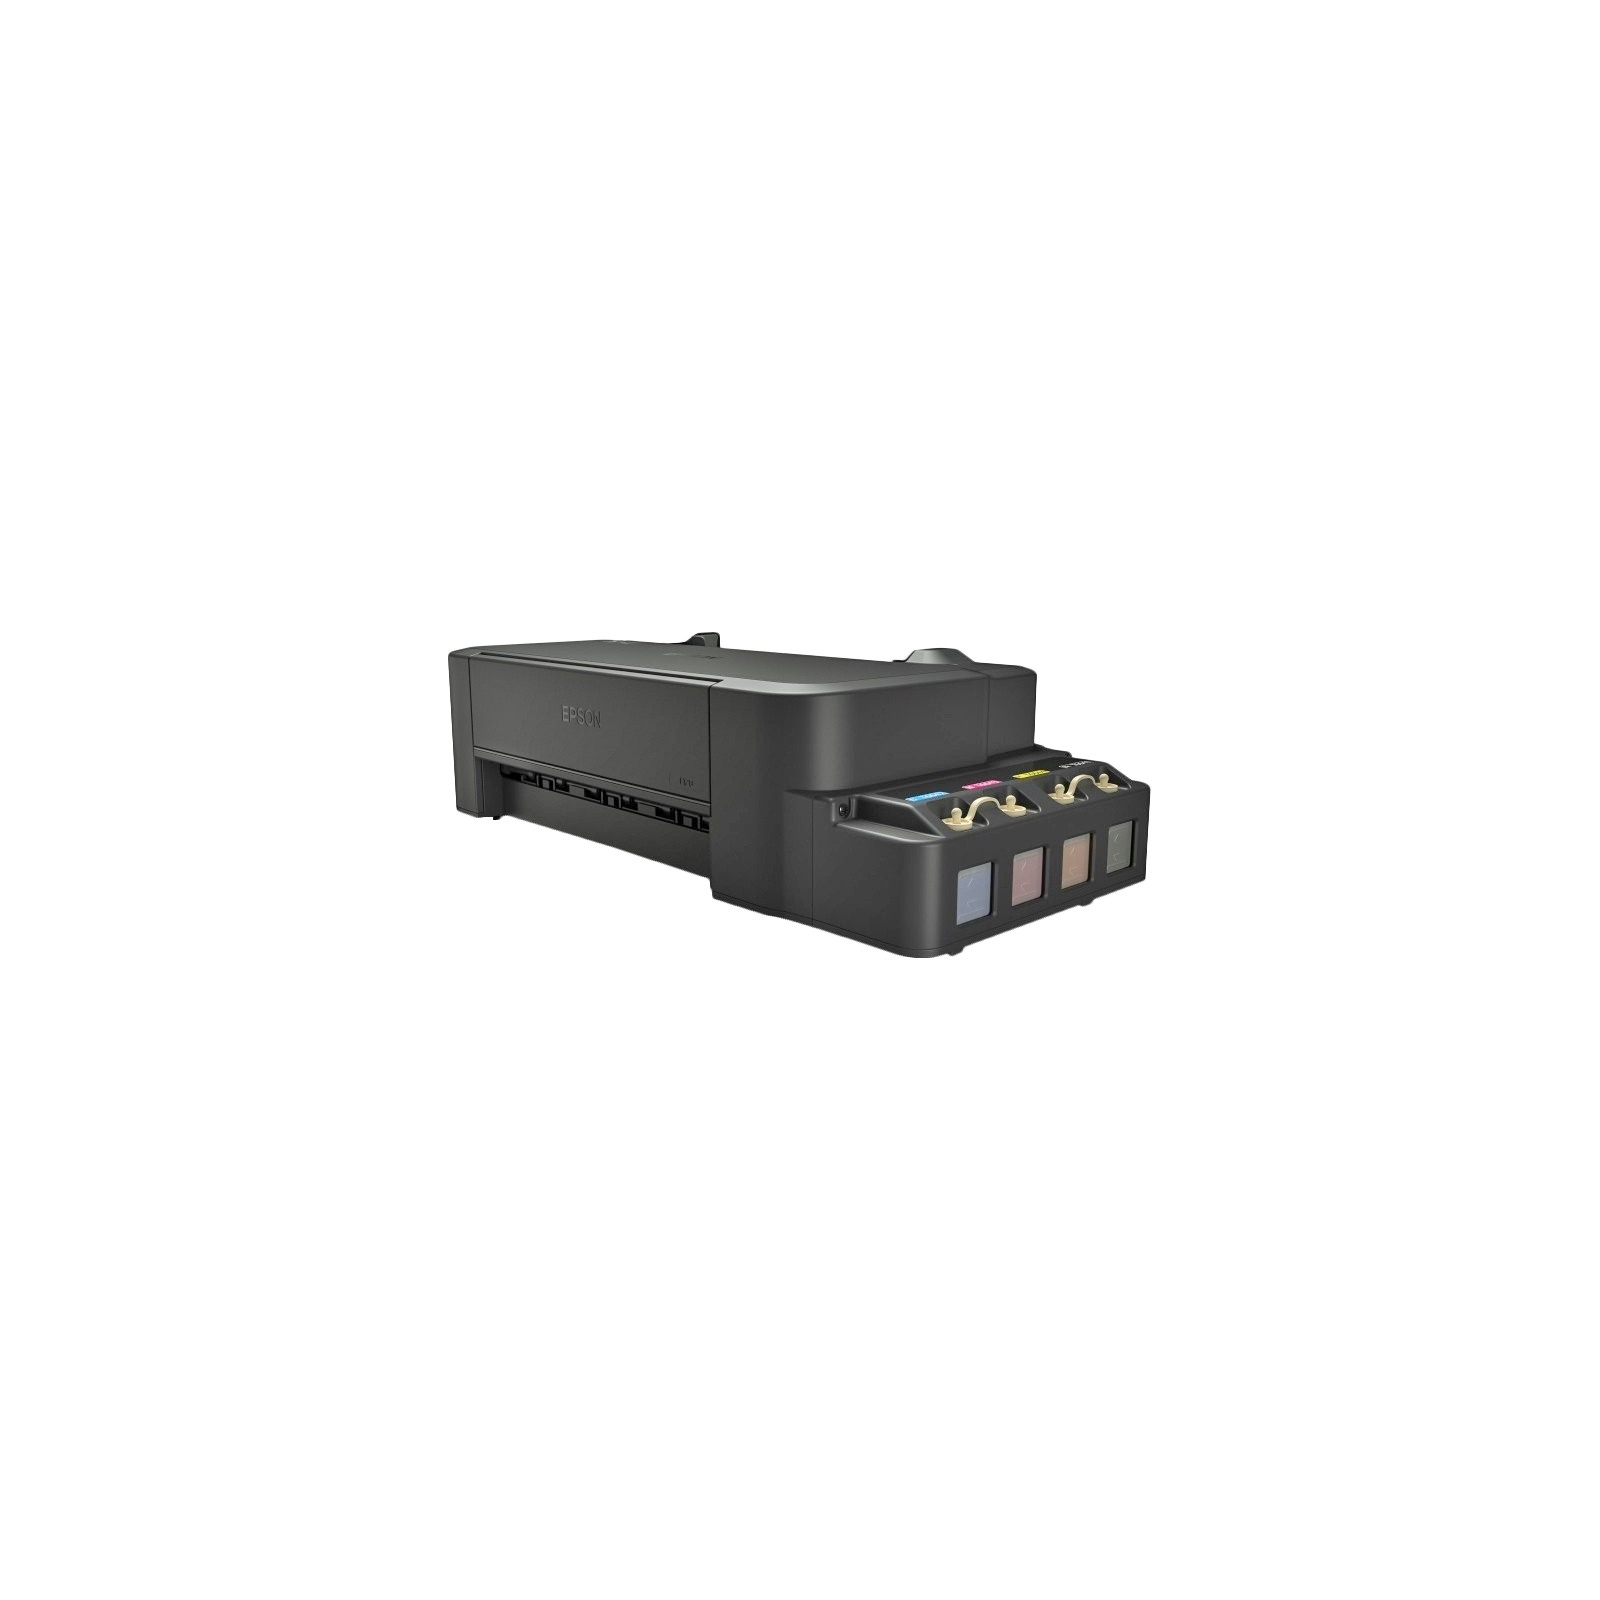 Струменевий принтер Epson L120 (C11CD76302)